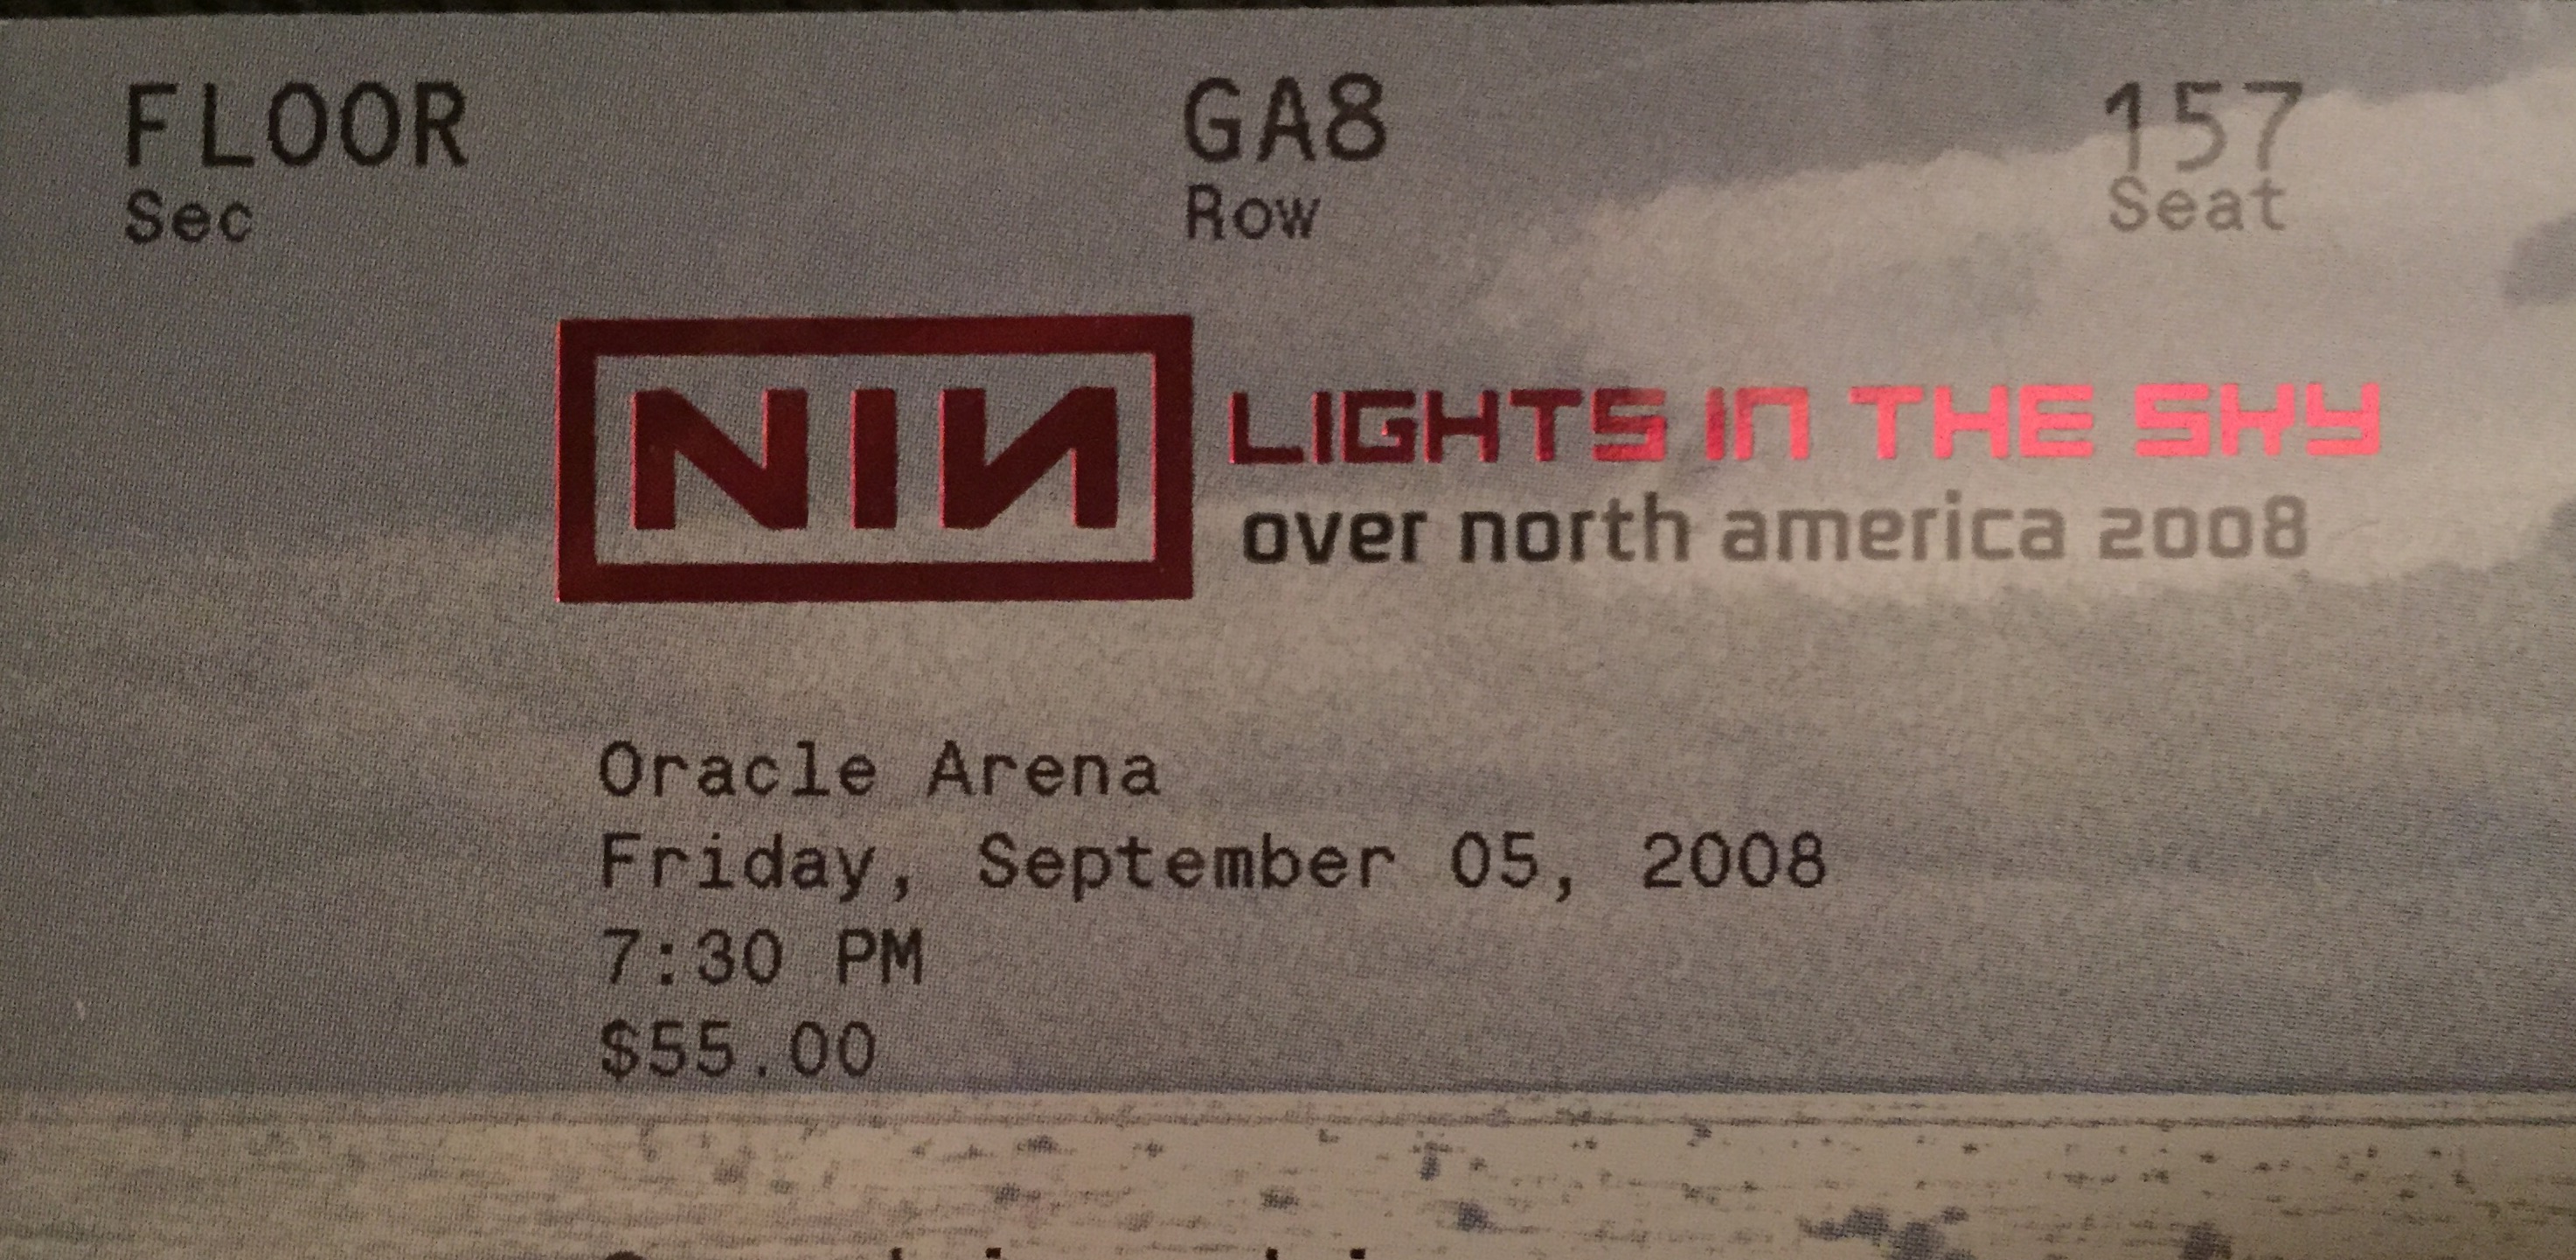 2008/09/05 Ticket